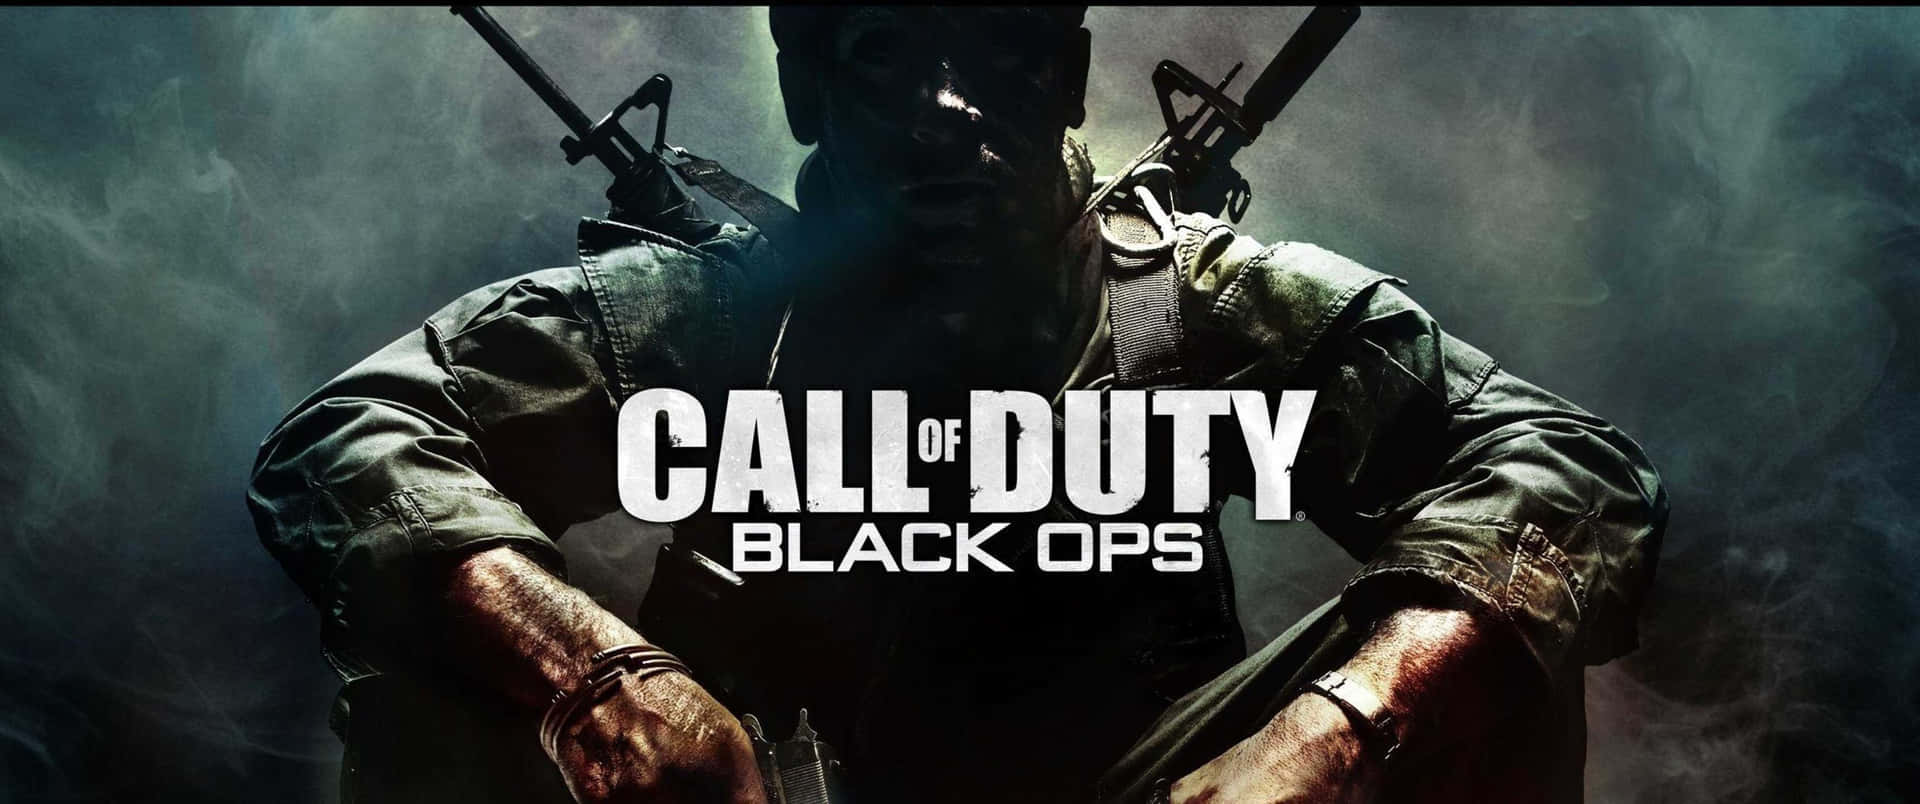 3440x1440p Fondods De Call Of Duty Black Ops 4